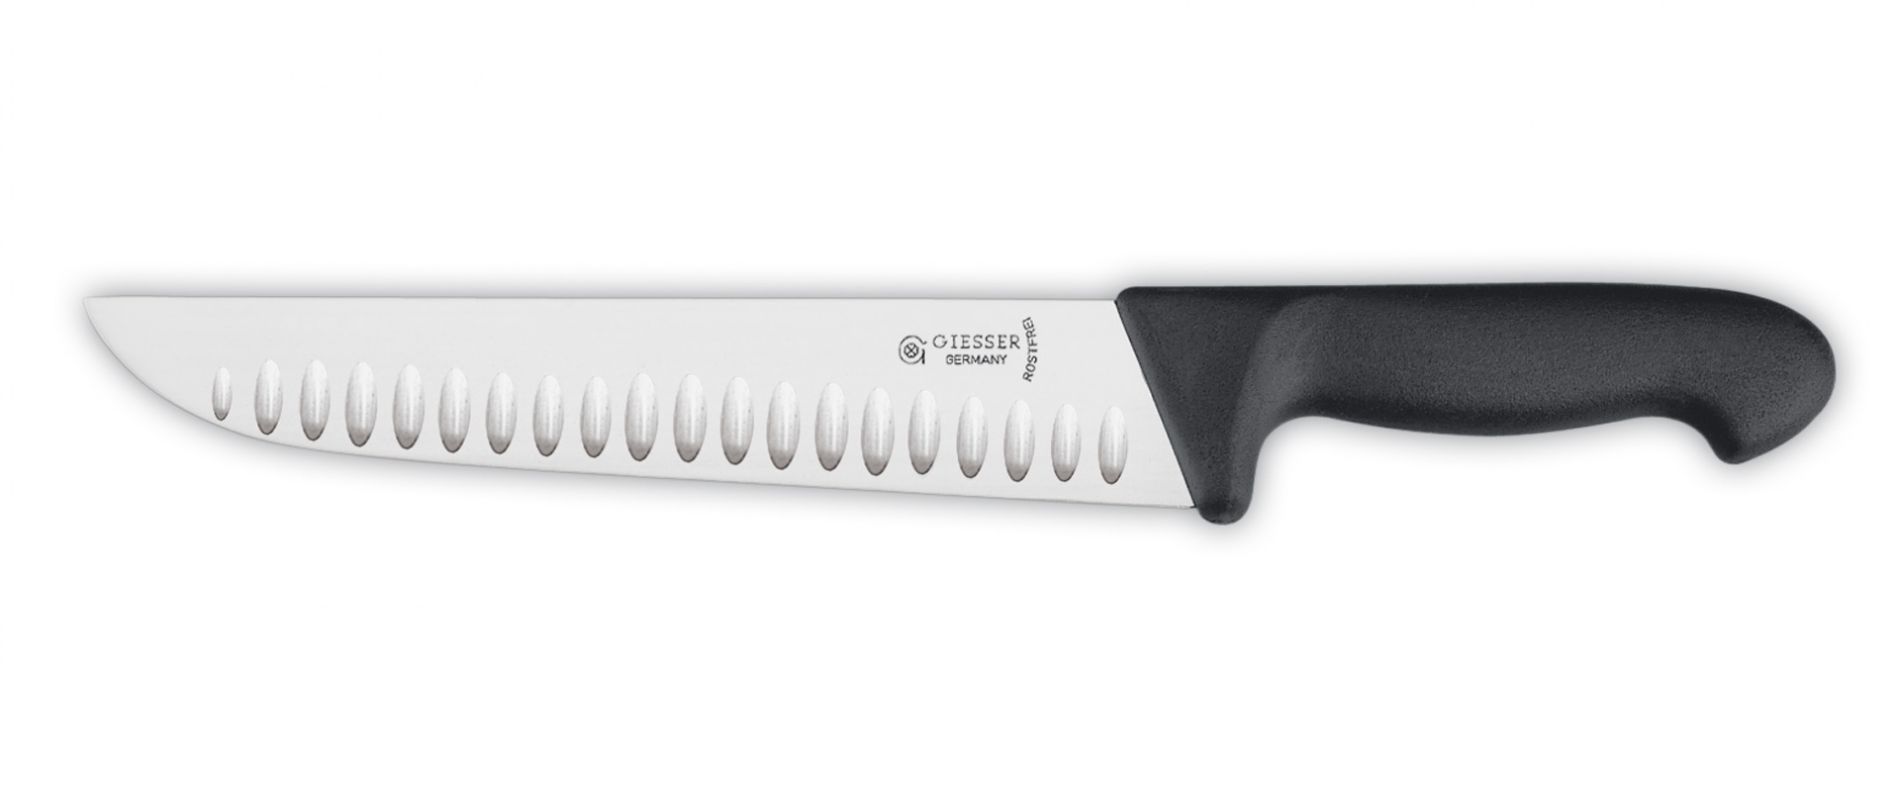 Cuchillo carnicero GIESSER para filetear, hoja 27cm, ancha, rígida, con alveólos mango clásico,  negro